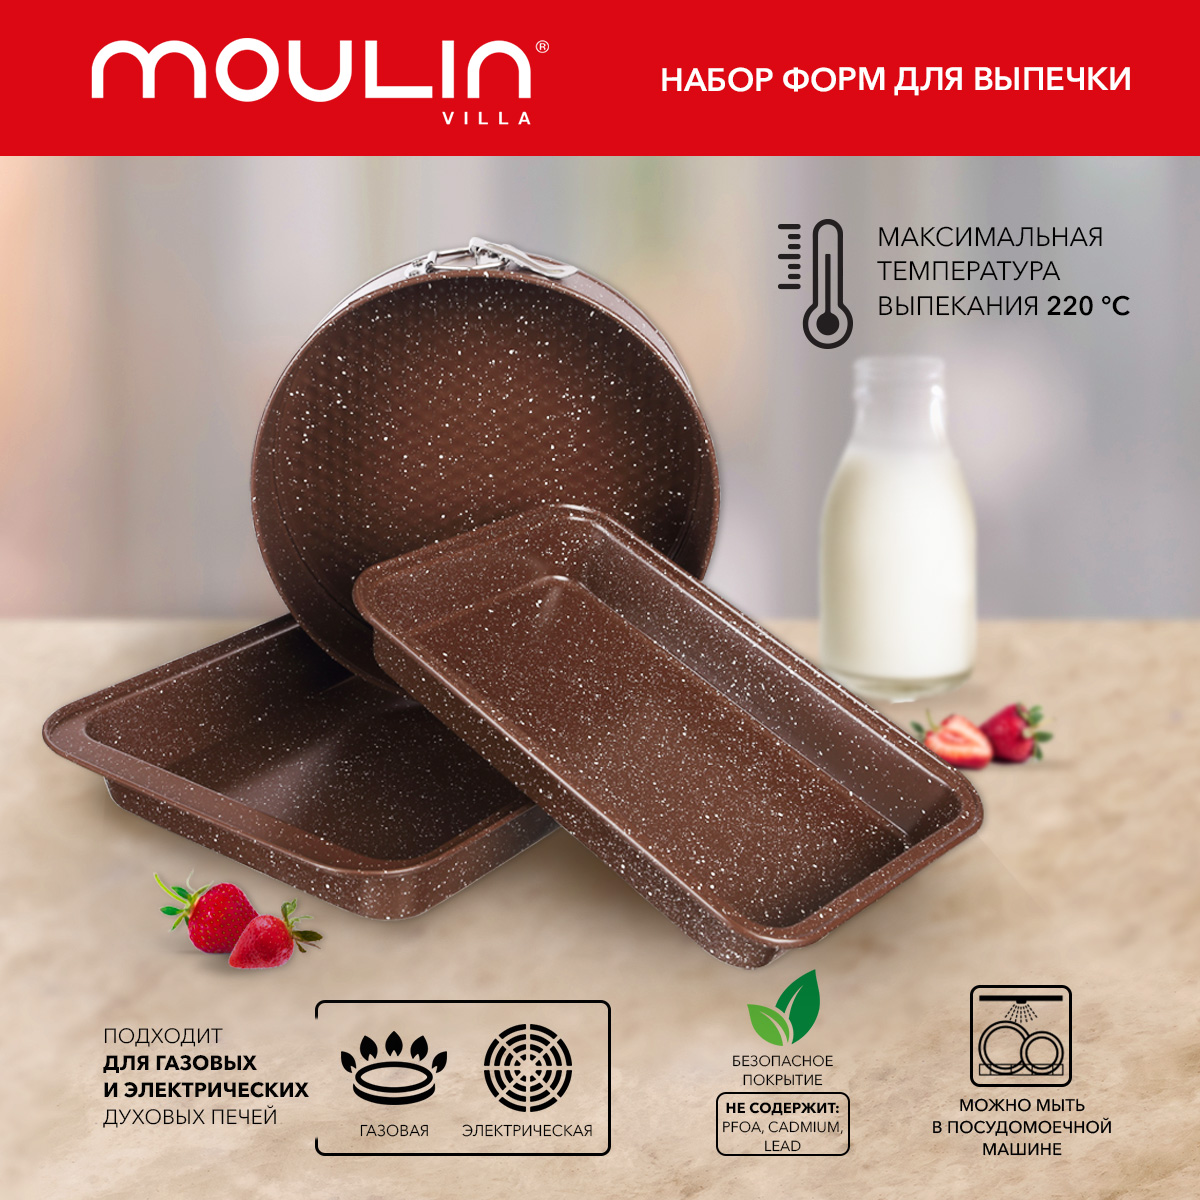 Набор форм для выпечки Moulin 